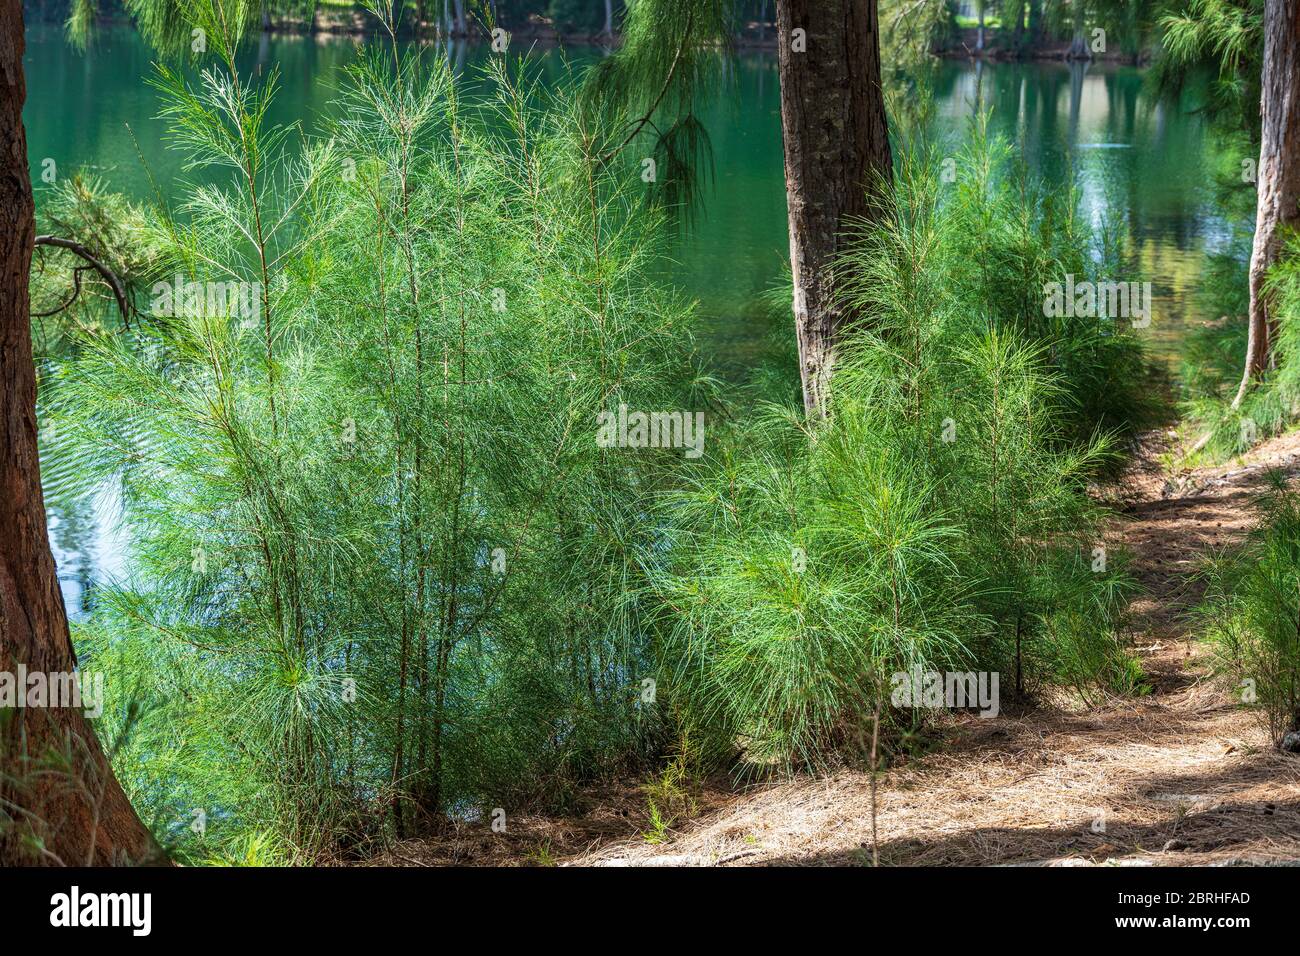 Australian pine tree (Casuarina equisetifolia) young green plants growing along lake - Davie, Florida, USA Stock Photo